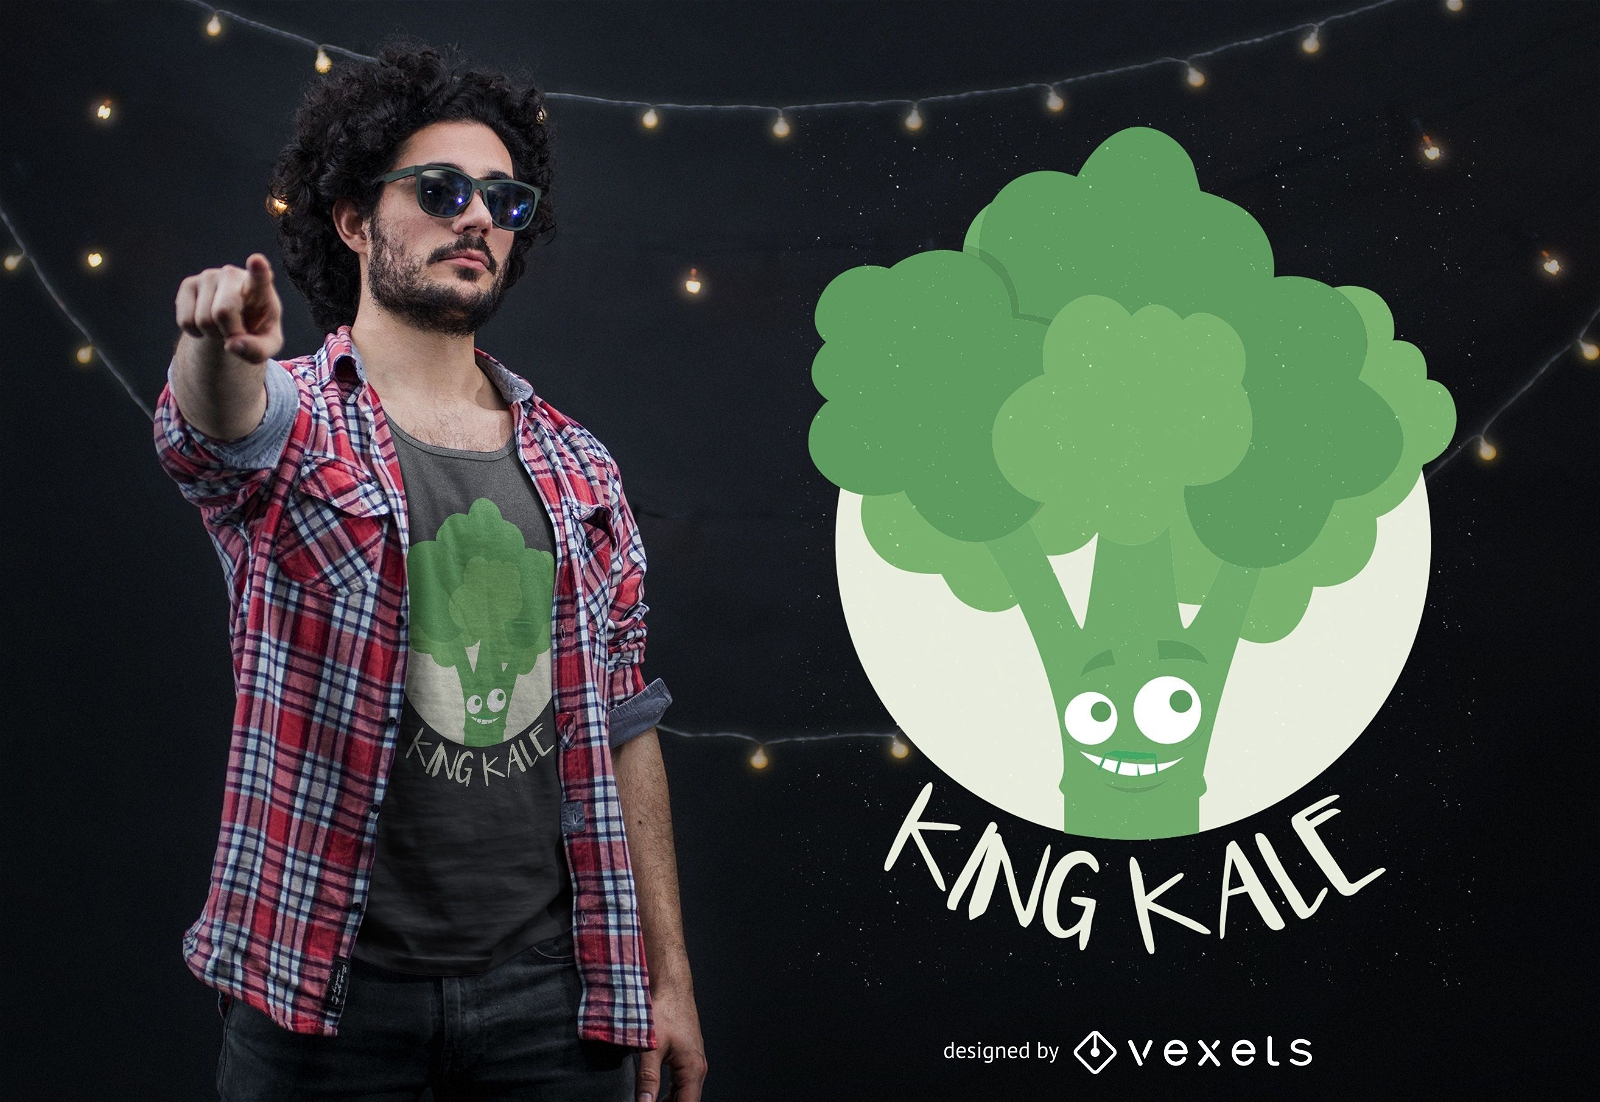 Dise?o de camiseta King Kale